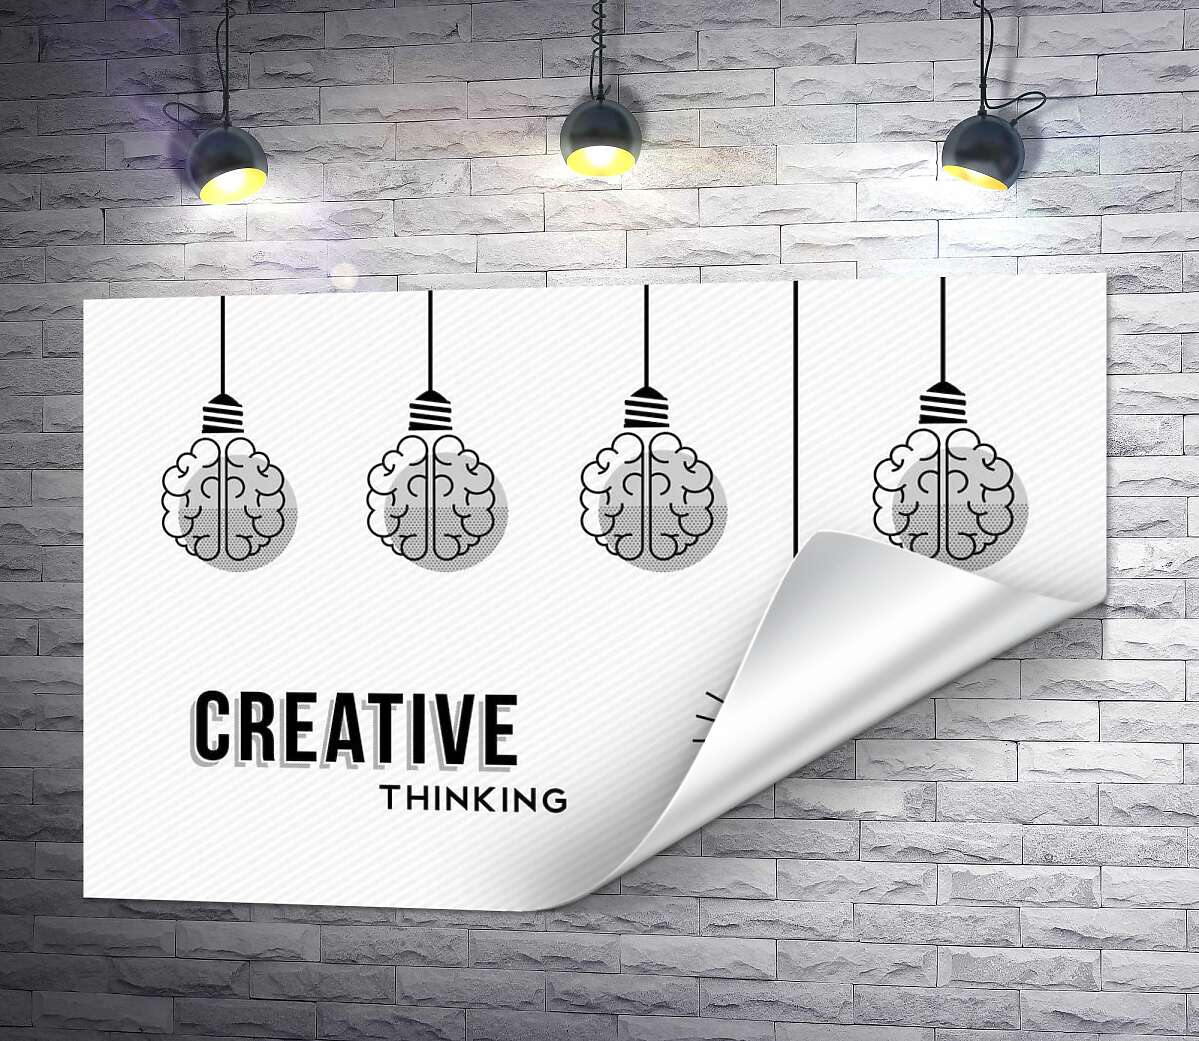 печать Гирлянда из лампочек над фразой "creative thinking"